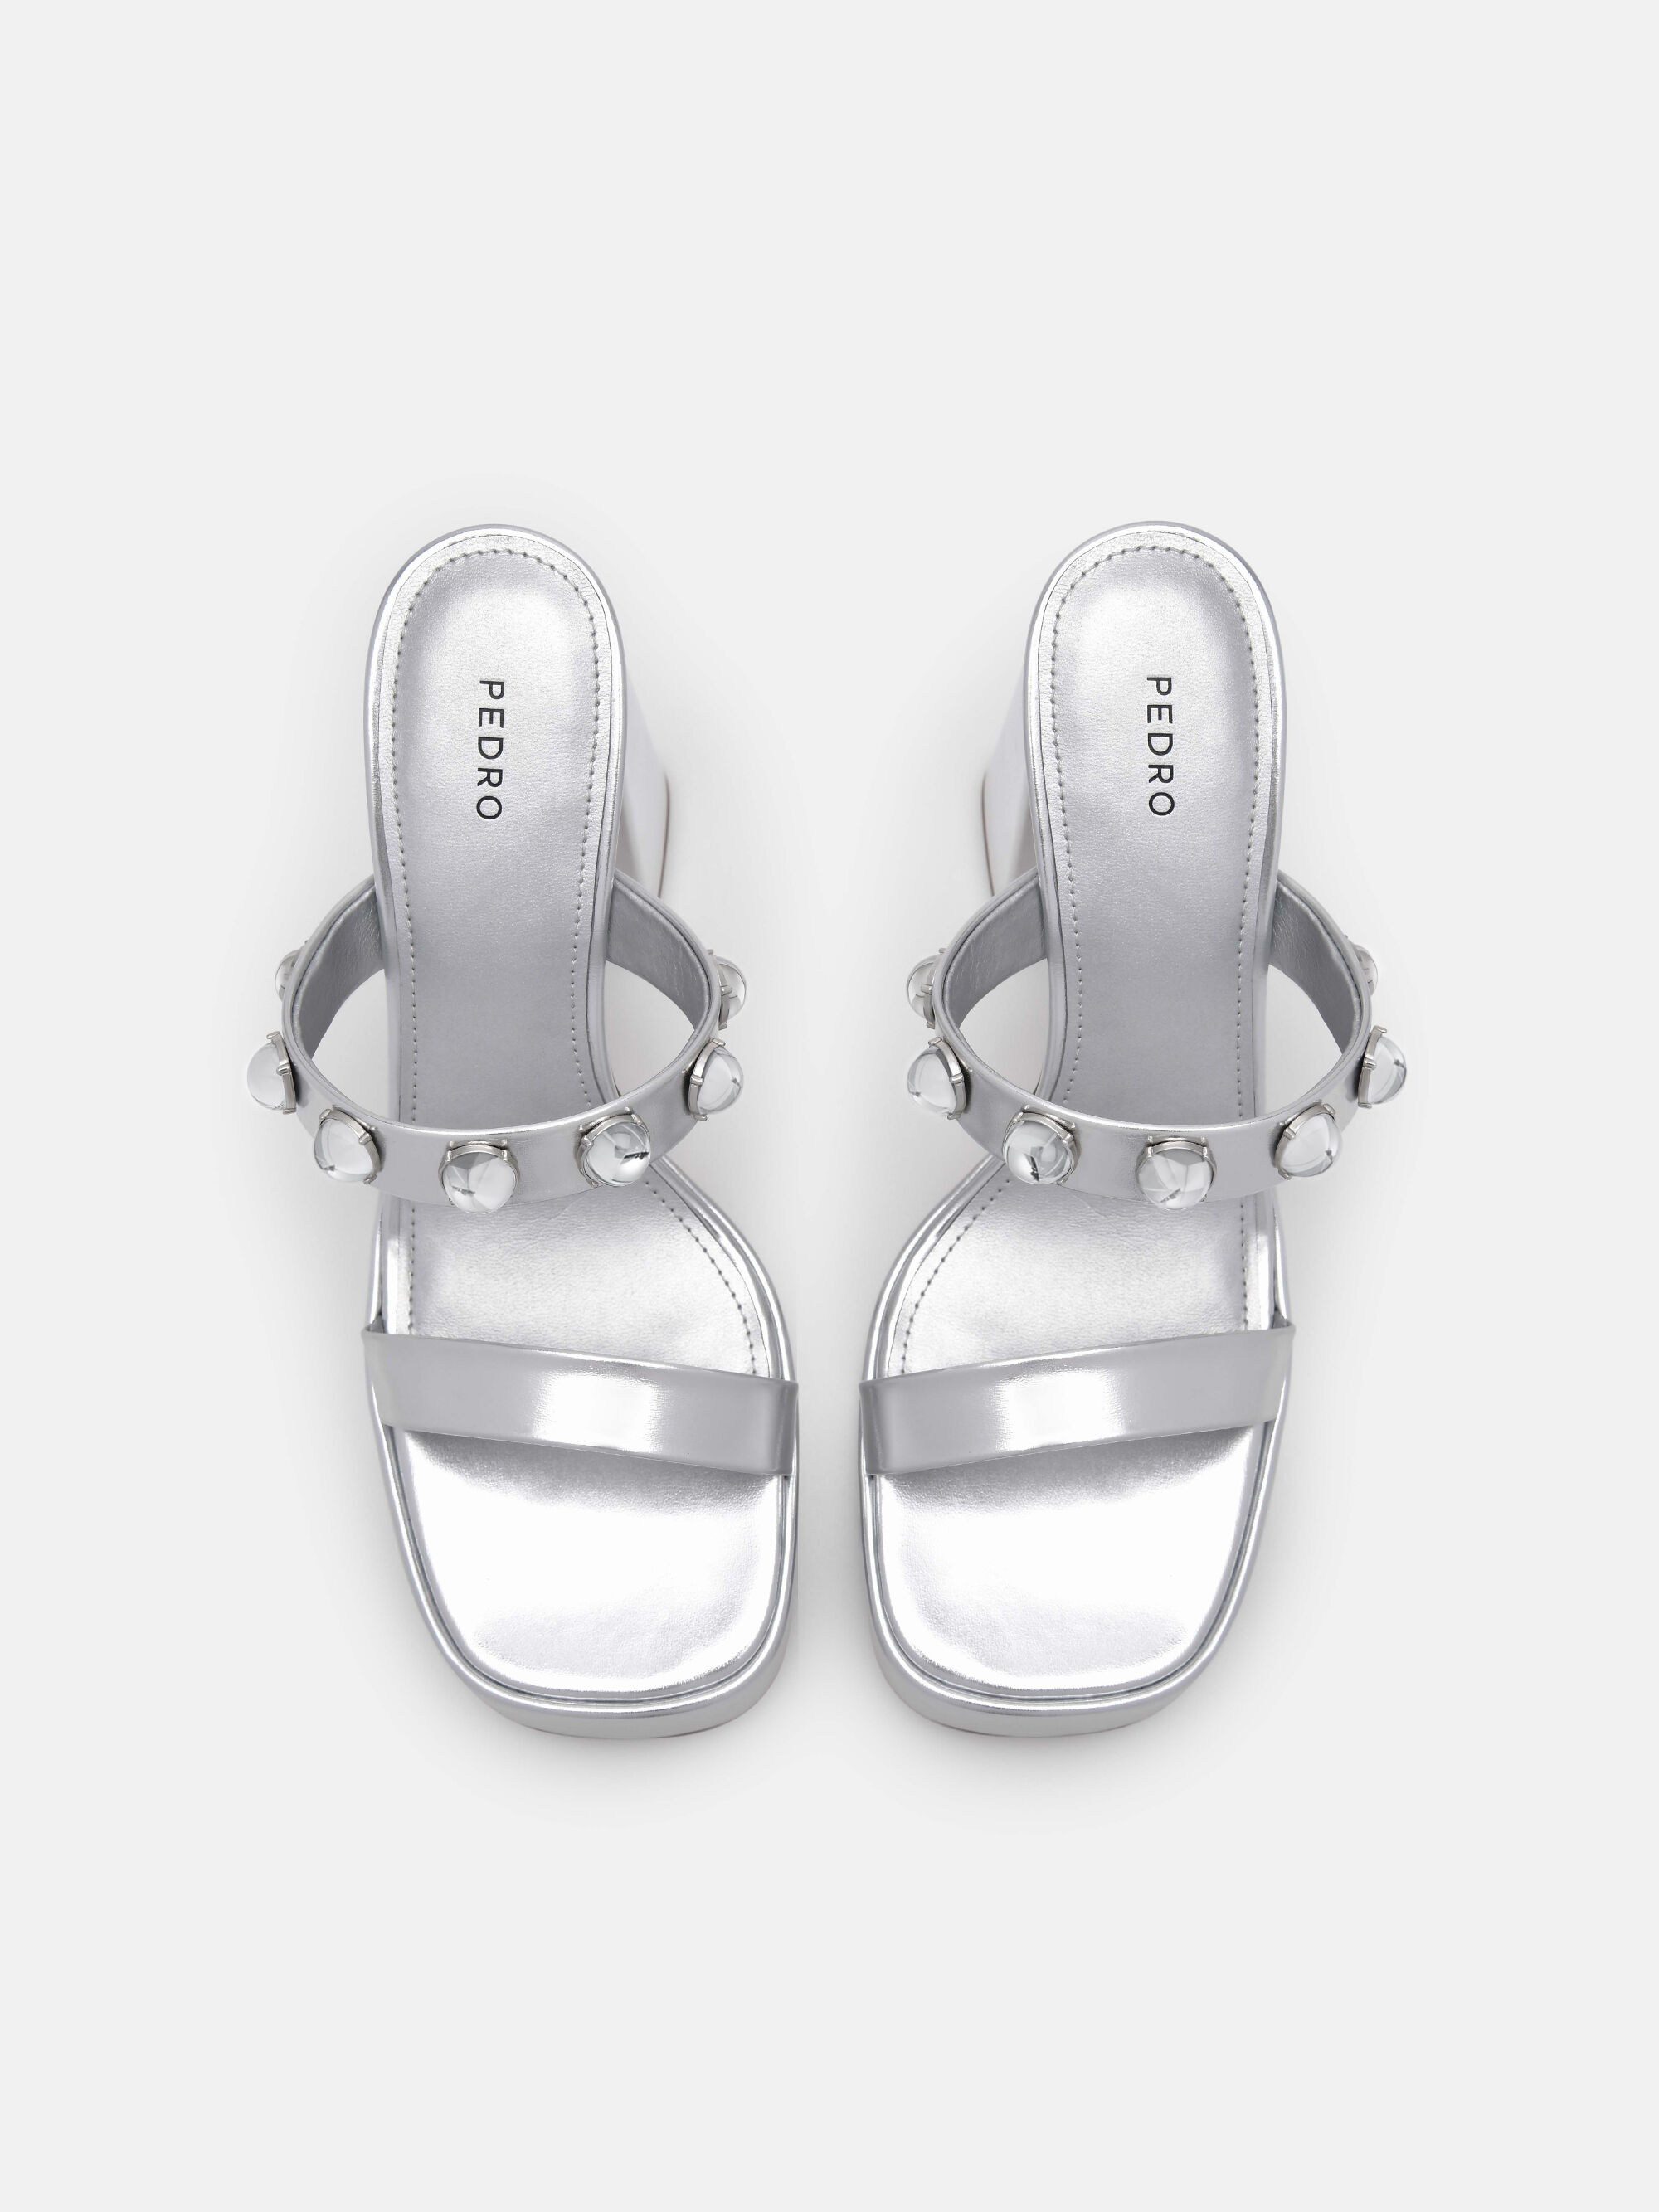 Luma Platform Heel Sandals, Silver